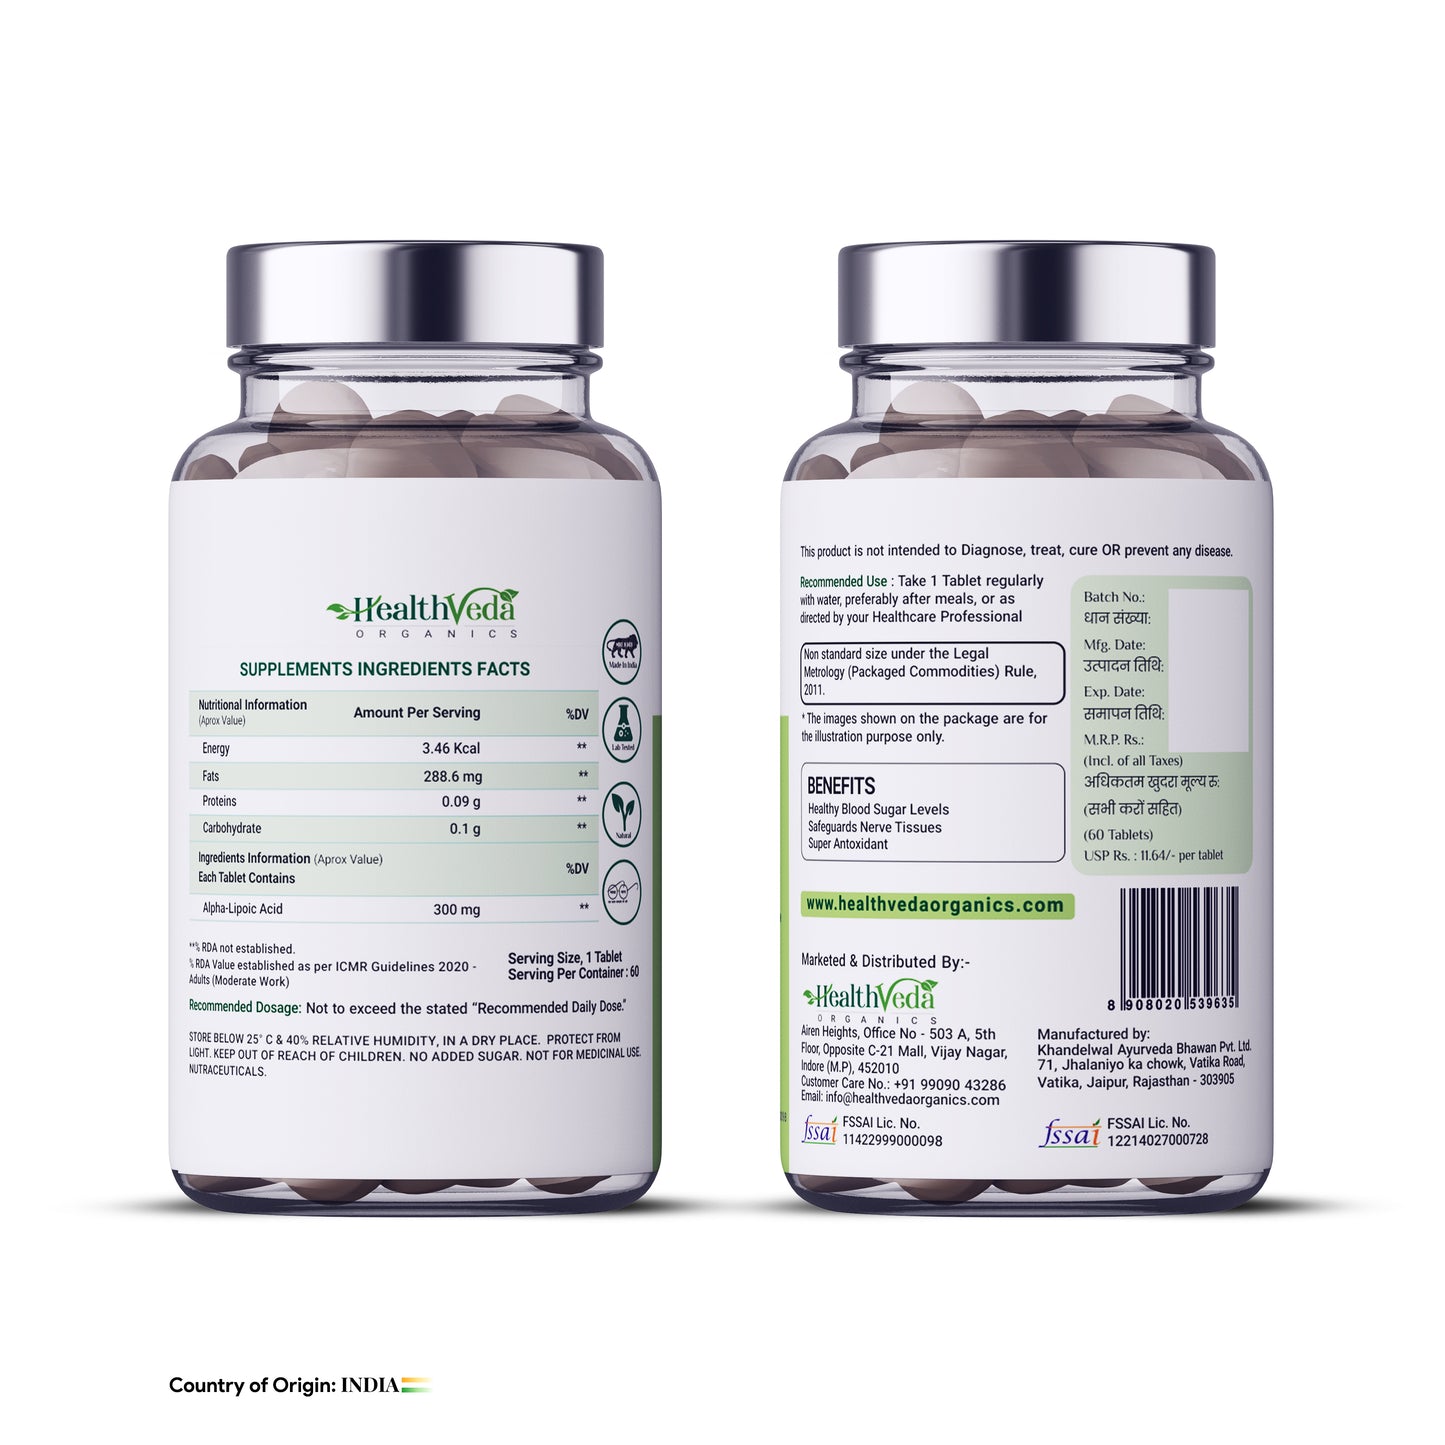 Health Veda Organics Alpha Lipoic Acid 300mg | 60 Veg Tablets | Boosts Liver Function, Maintains Healthy Blood Sugar, Antioxidant Support | For both Men & Women